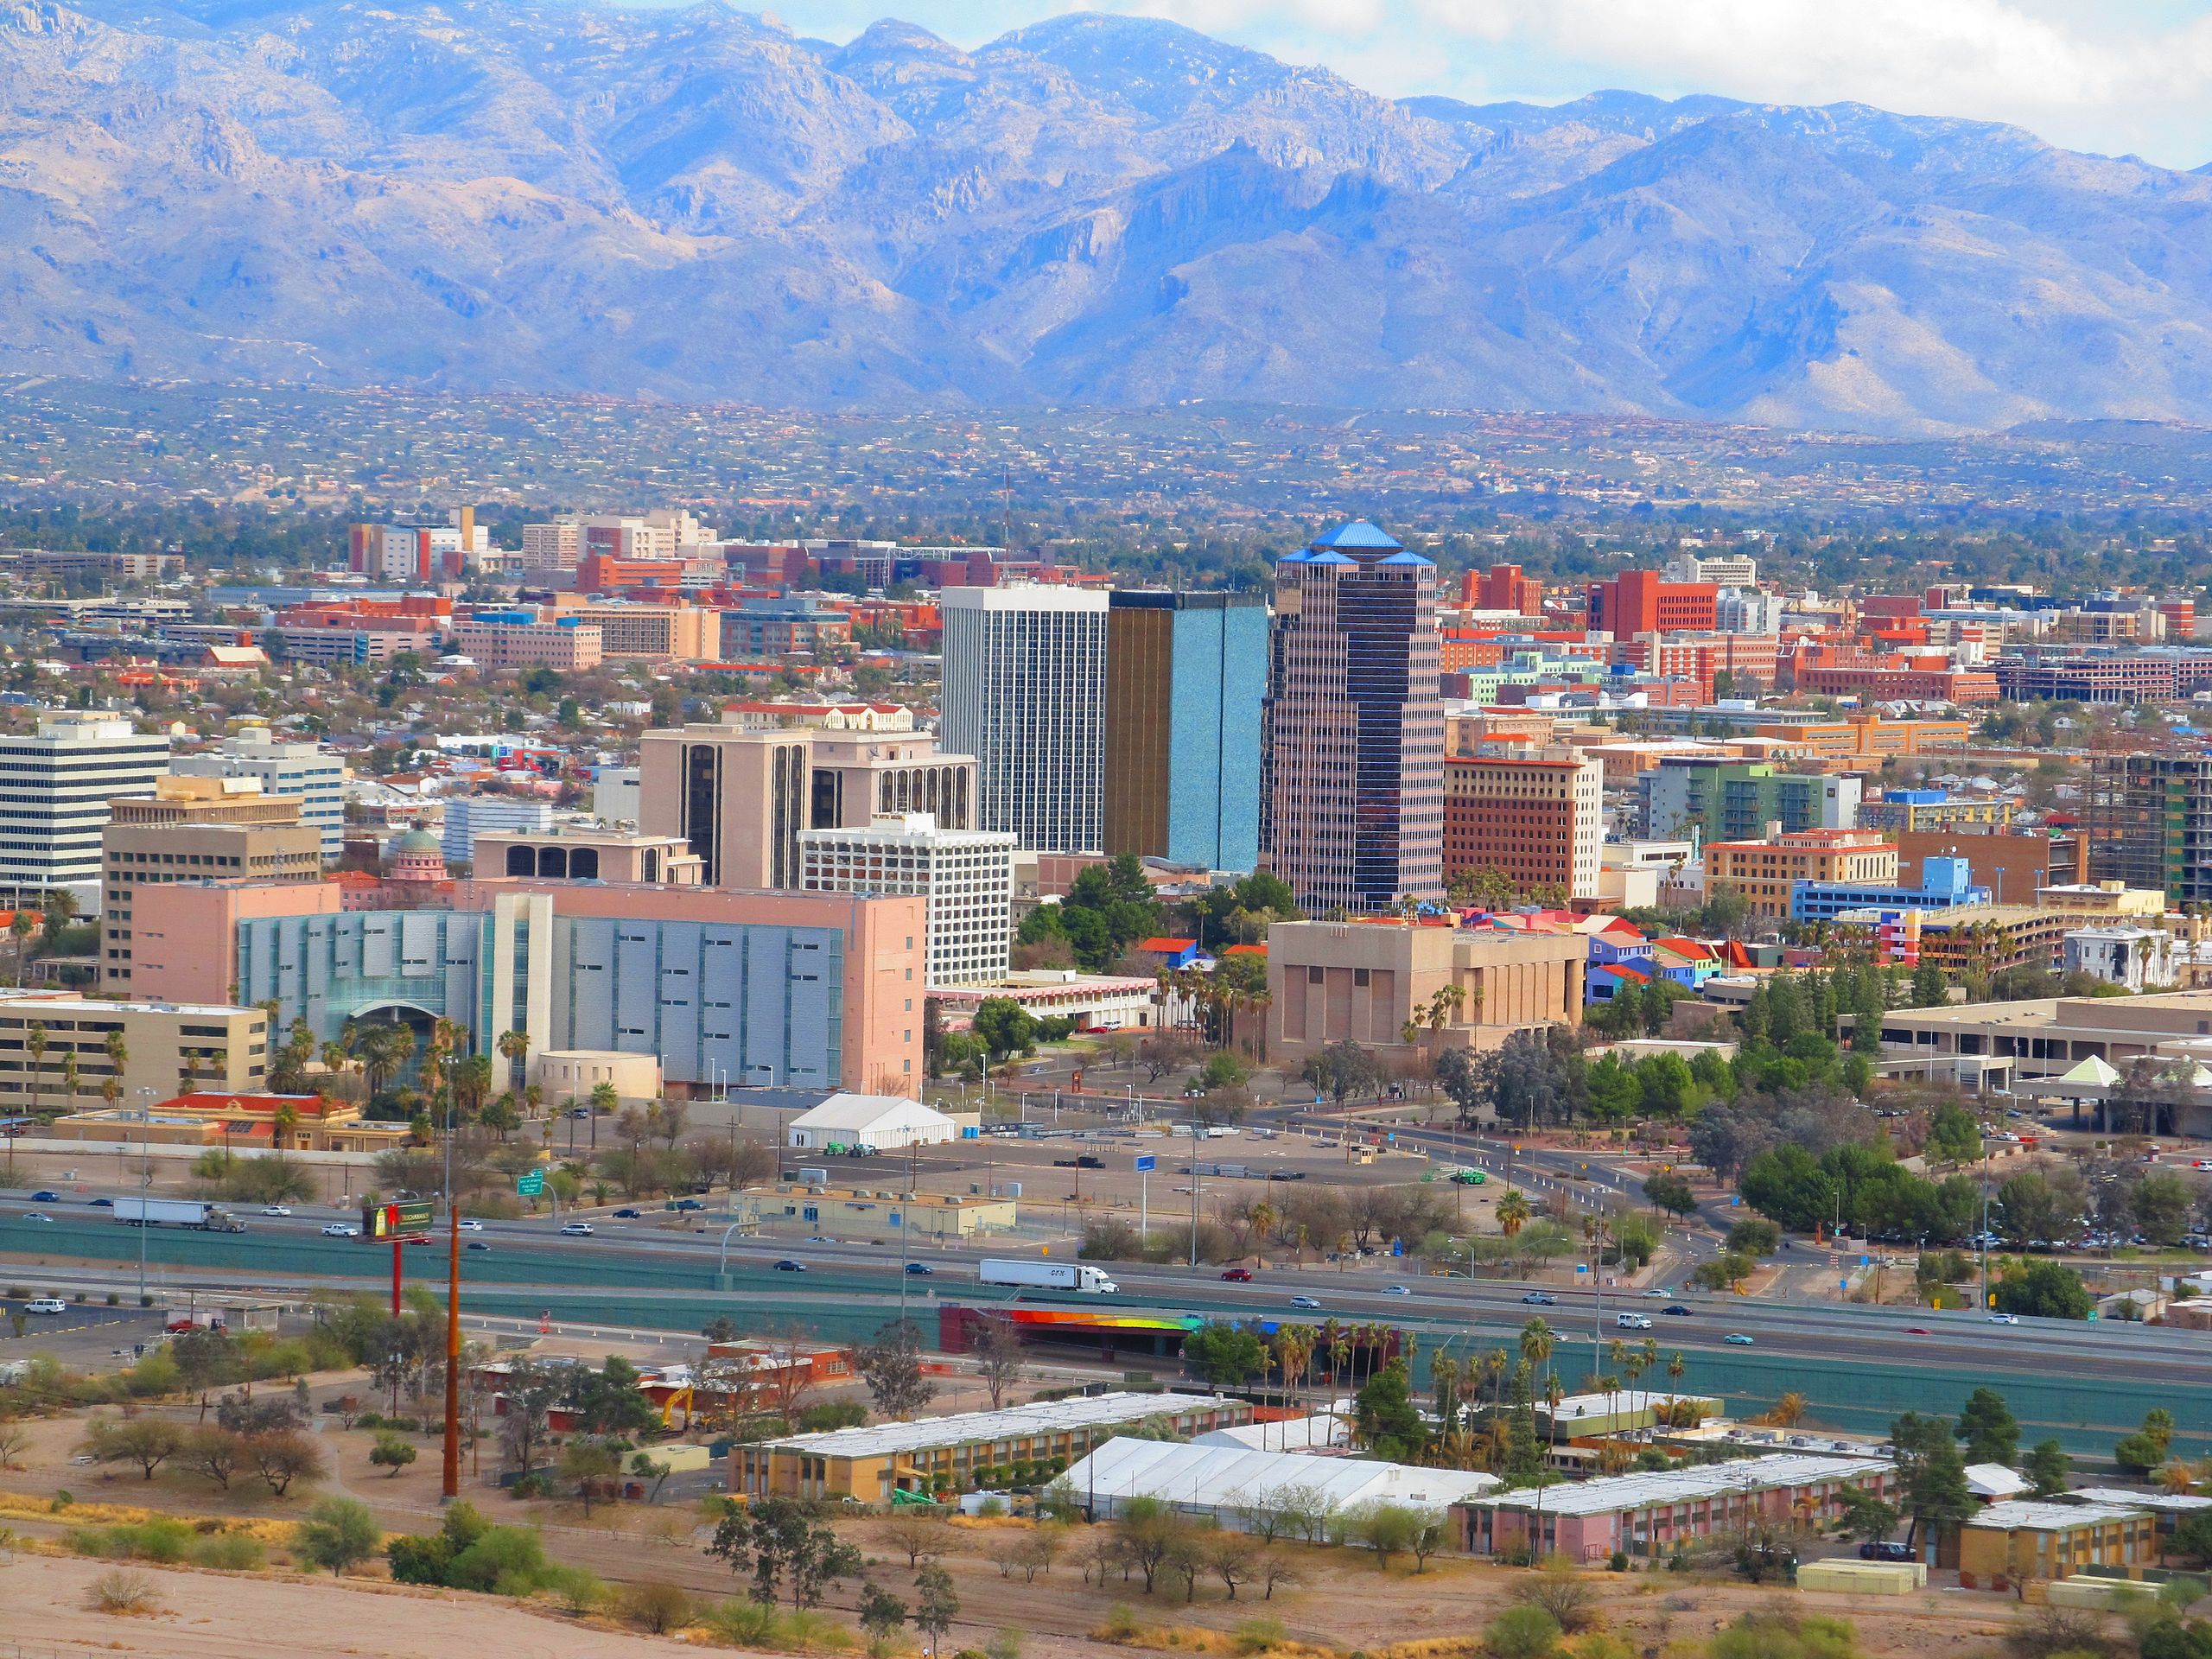 View of Buildings in Tucson Arizona